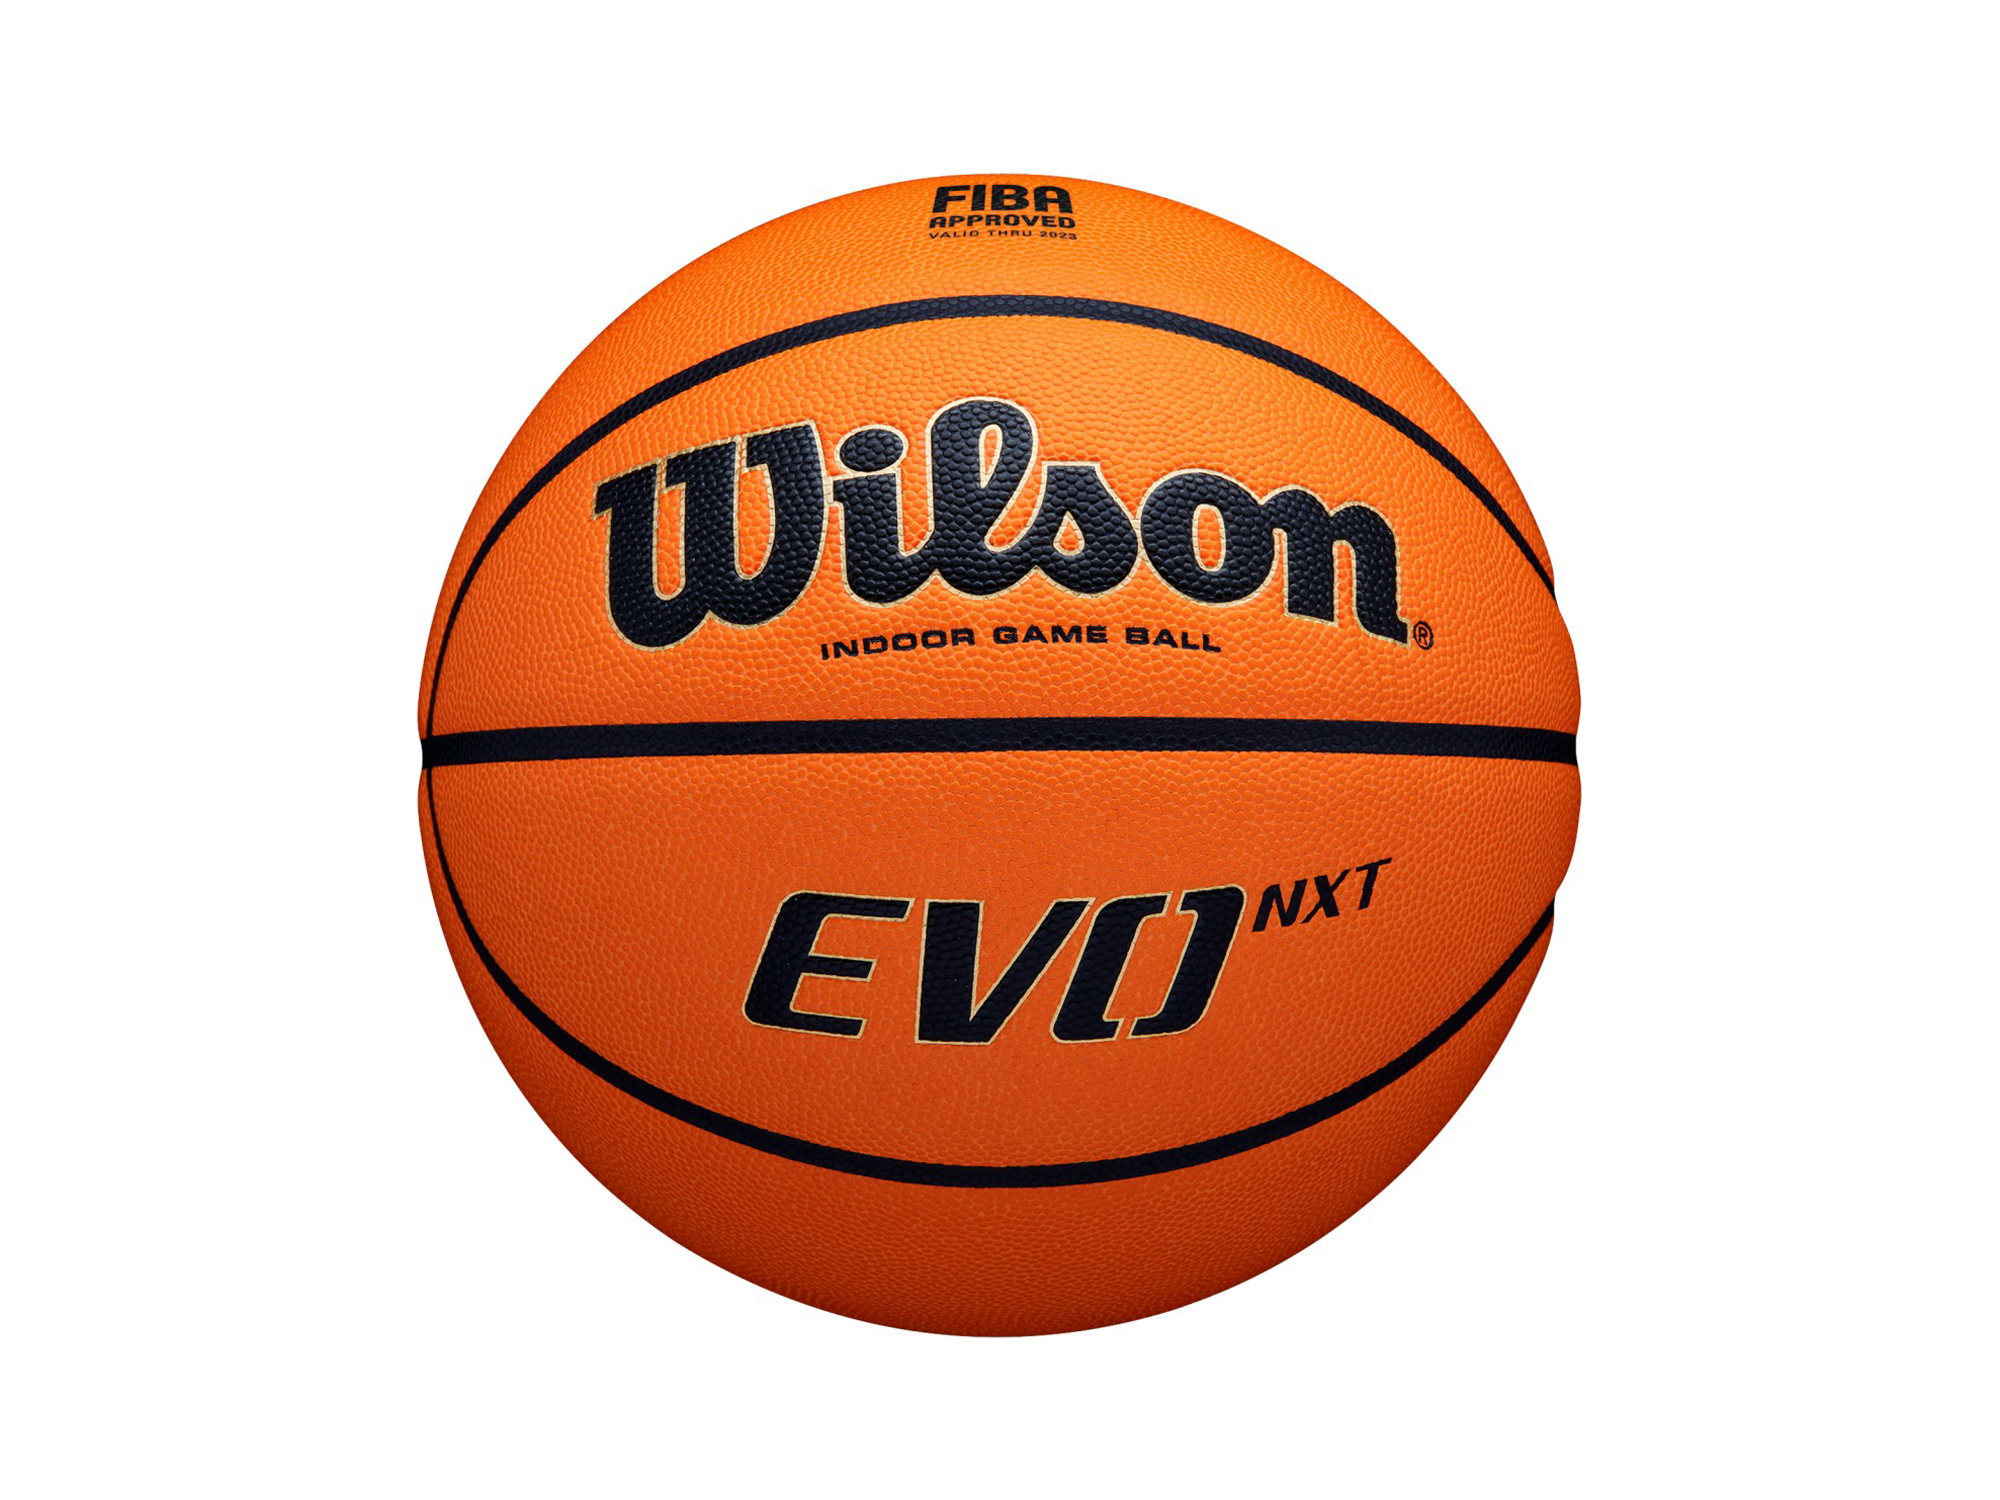 Wilson Evo NXT FIBA Basketball